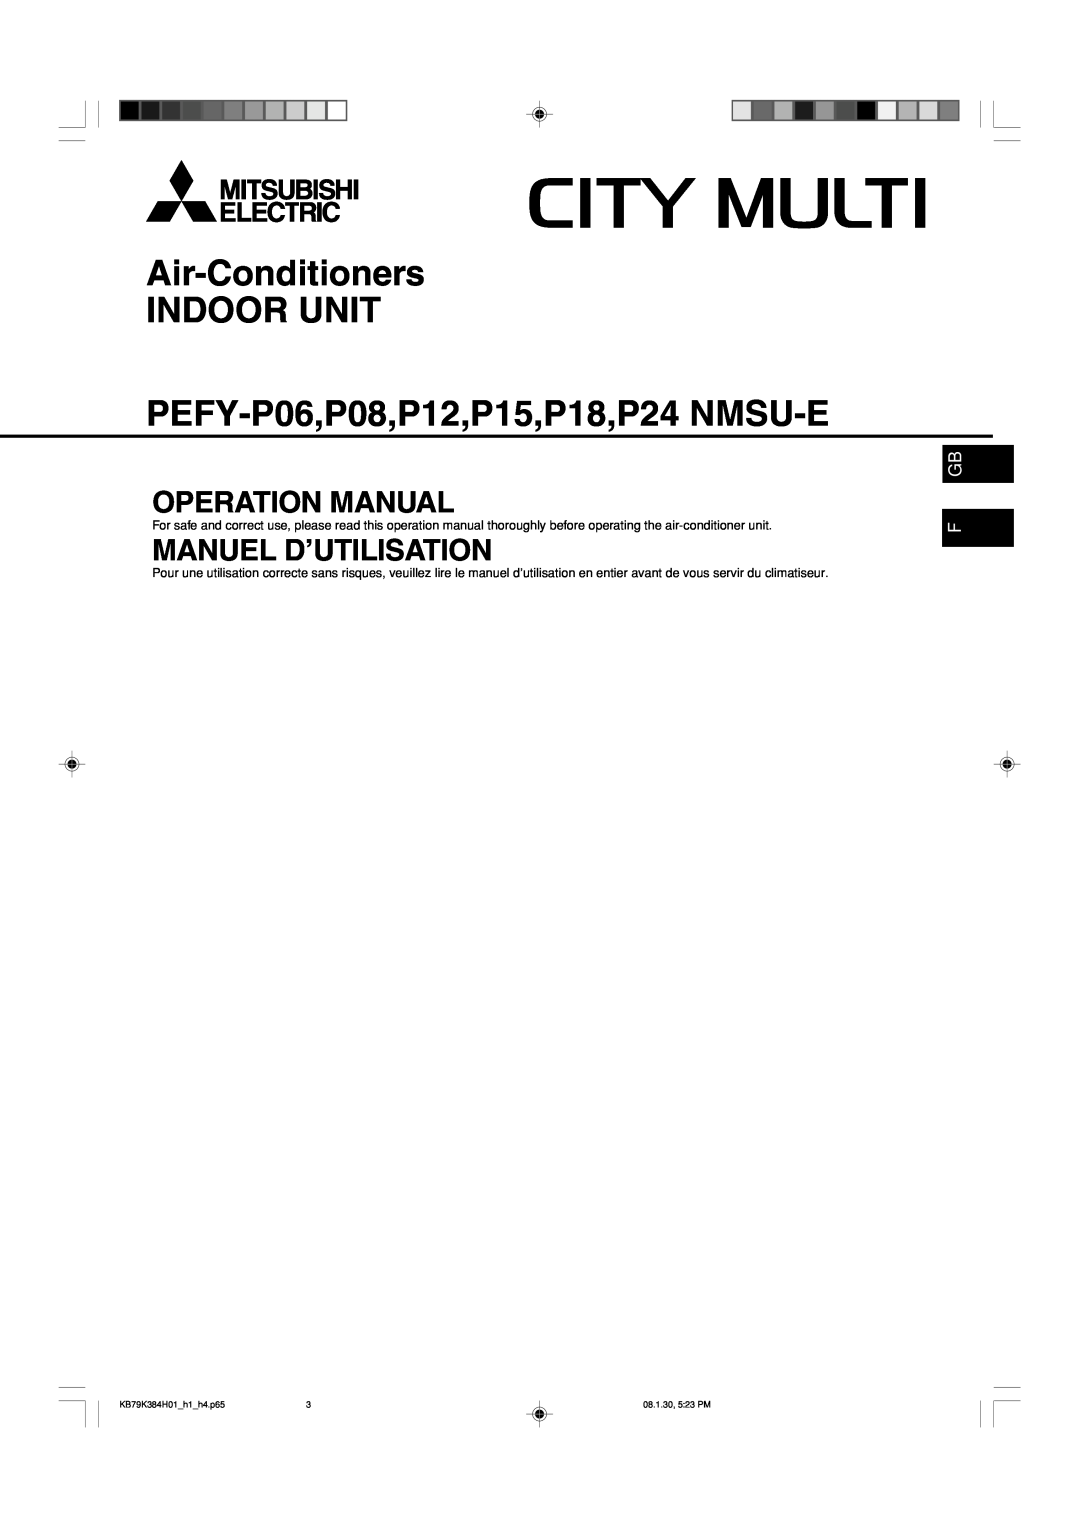 Maytag operation manual F Gb, Air-Conditioners INDOOR UNIT, PEFY-P06,P08,P12,P15,P18,P24 NMSU-E, Manuel D’Utilisation 